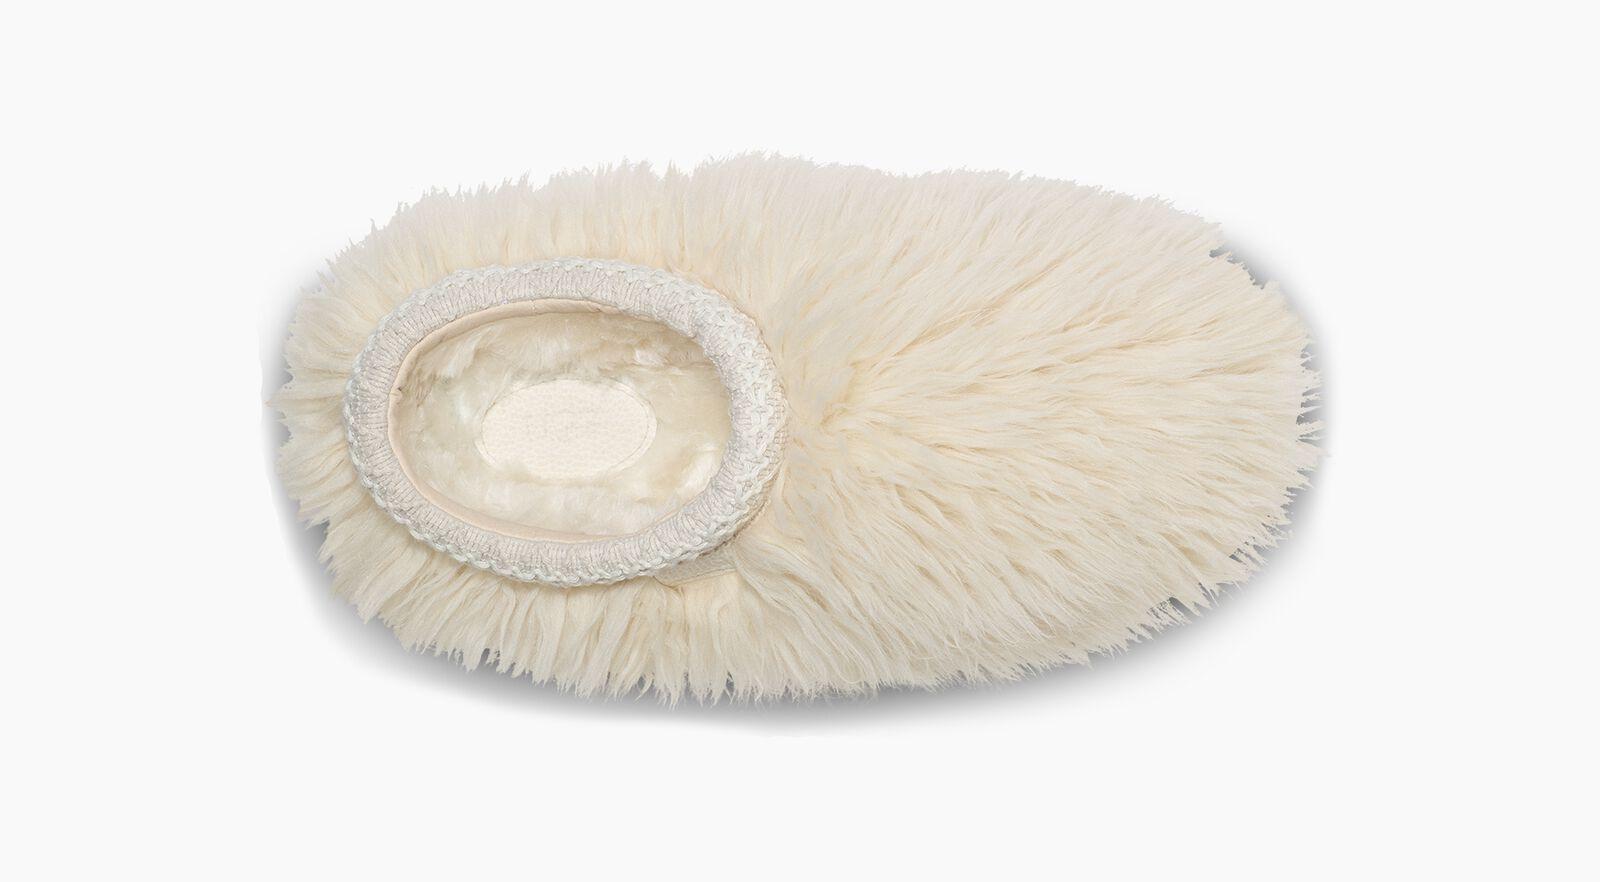 Ugg Women's Fluff Momma Sugar Tasman Faux Fur Clogs in White, Size 5